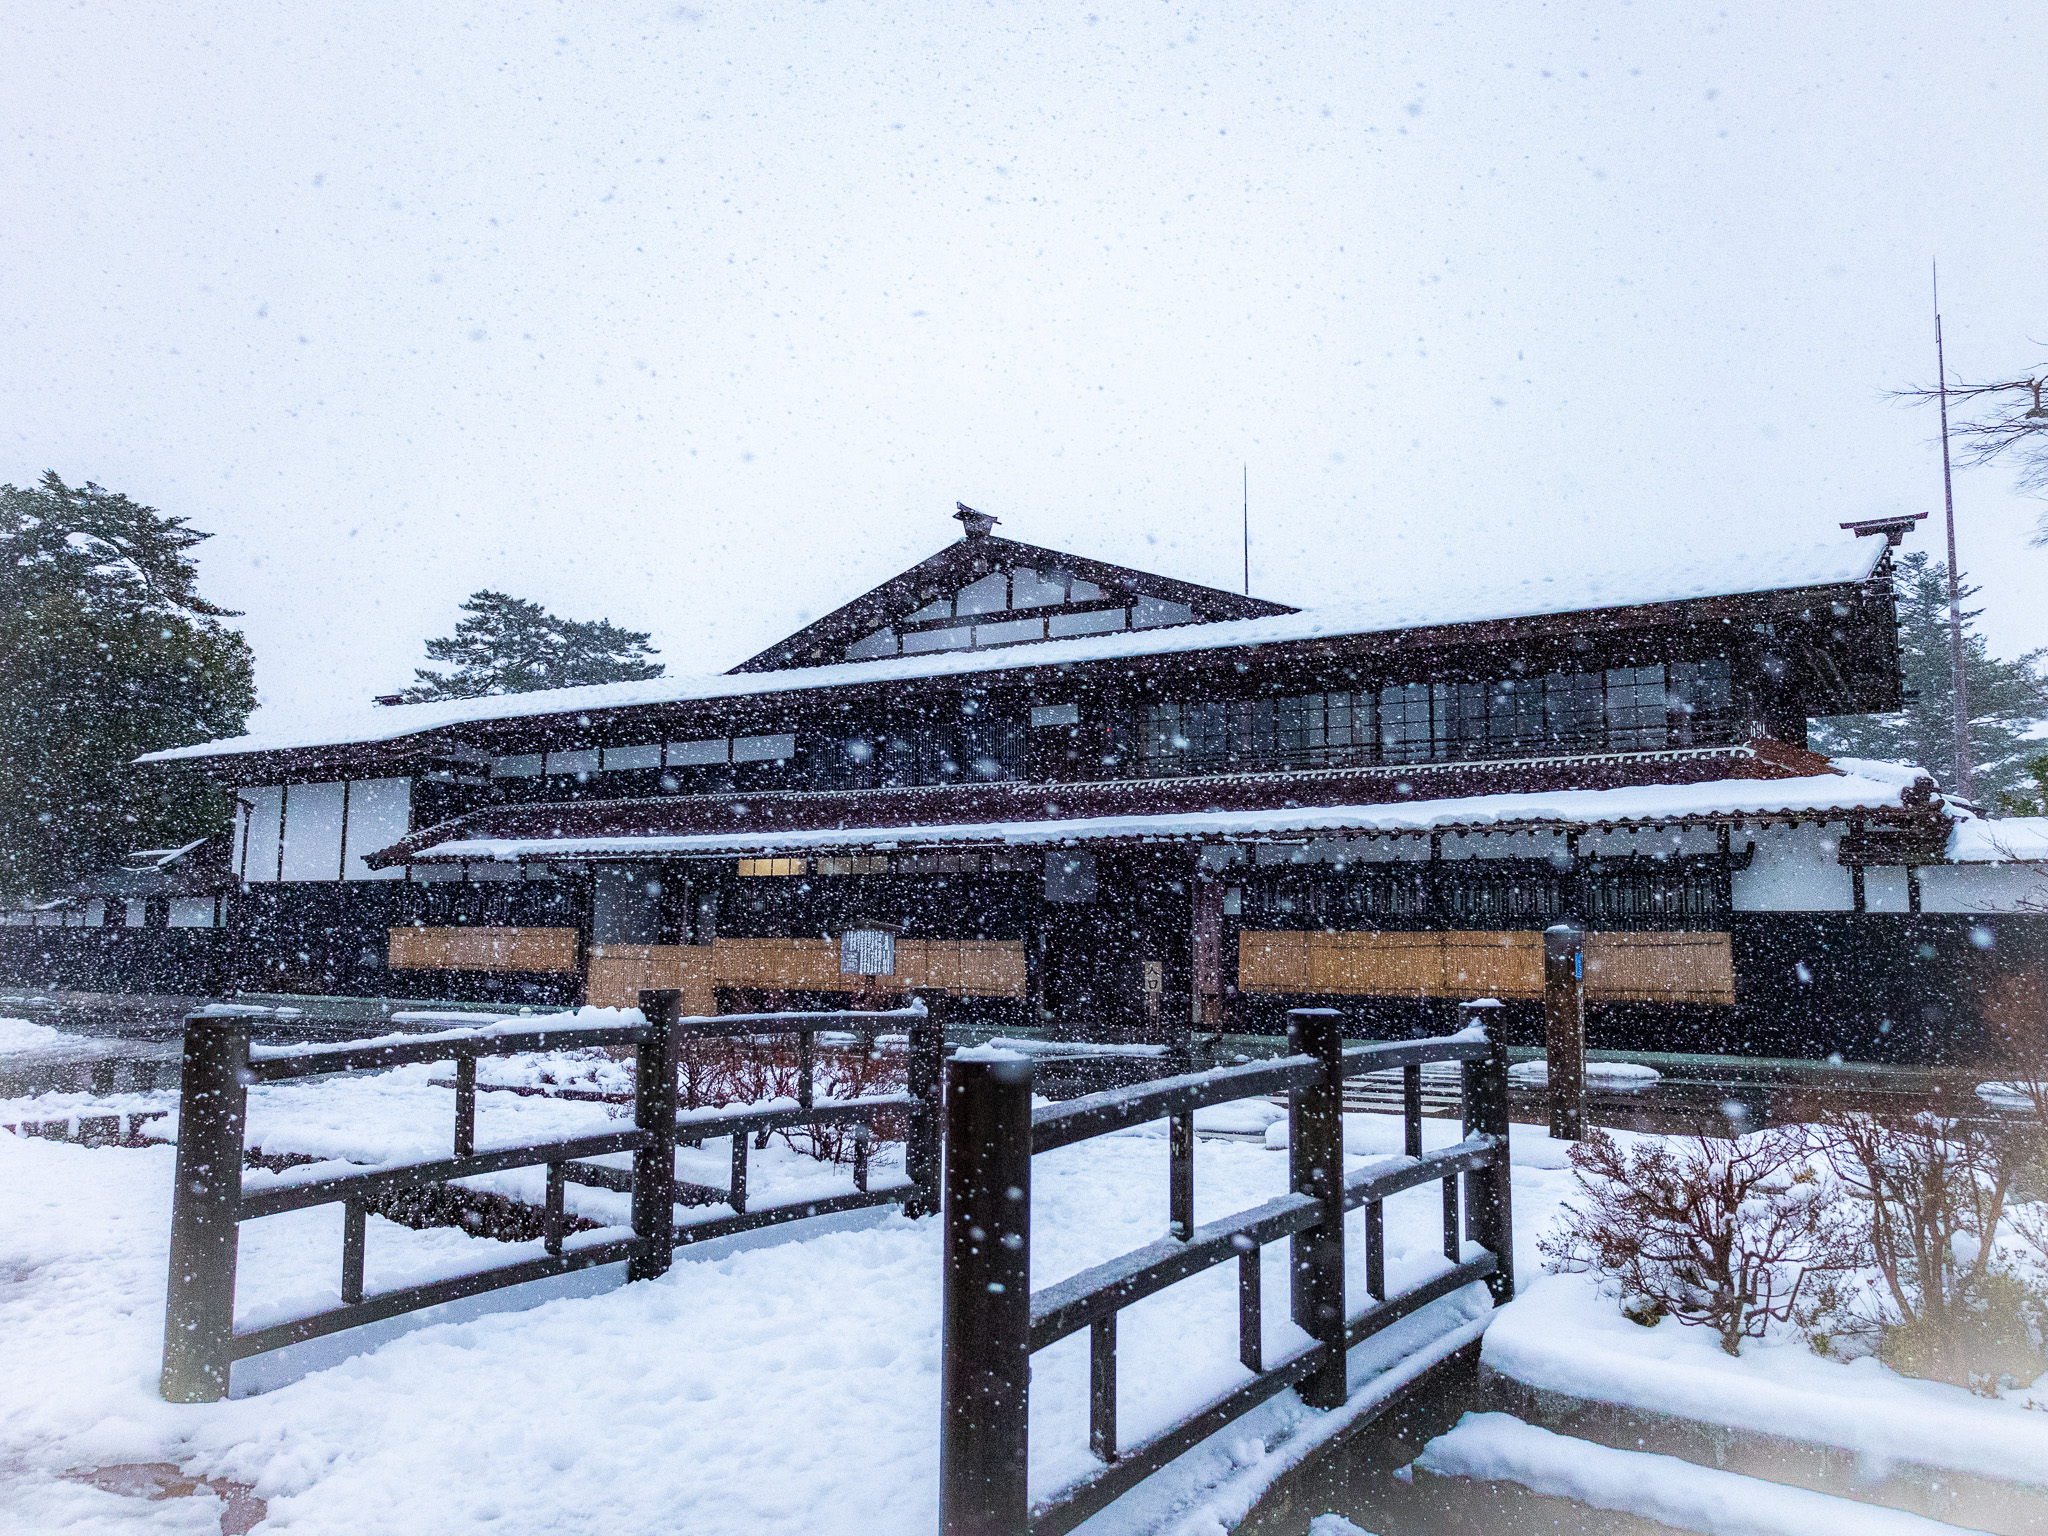 渡邉邸の雪景色